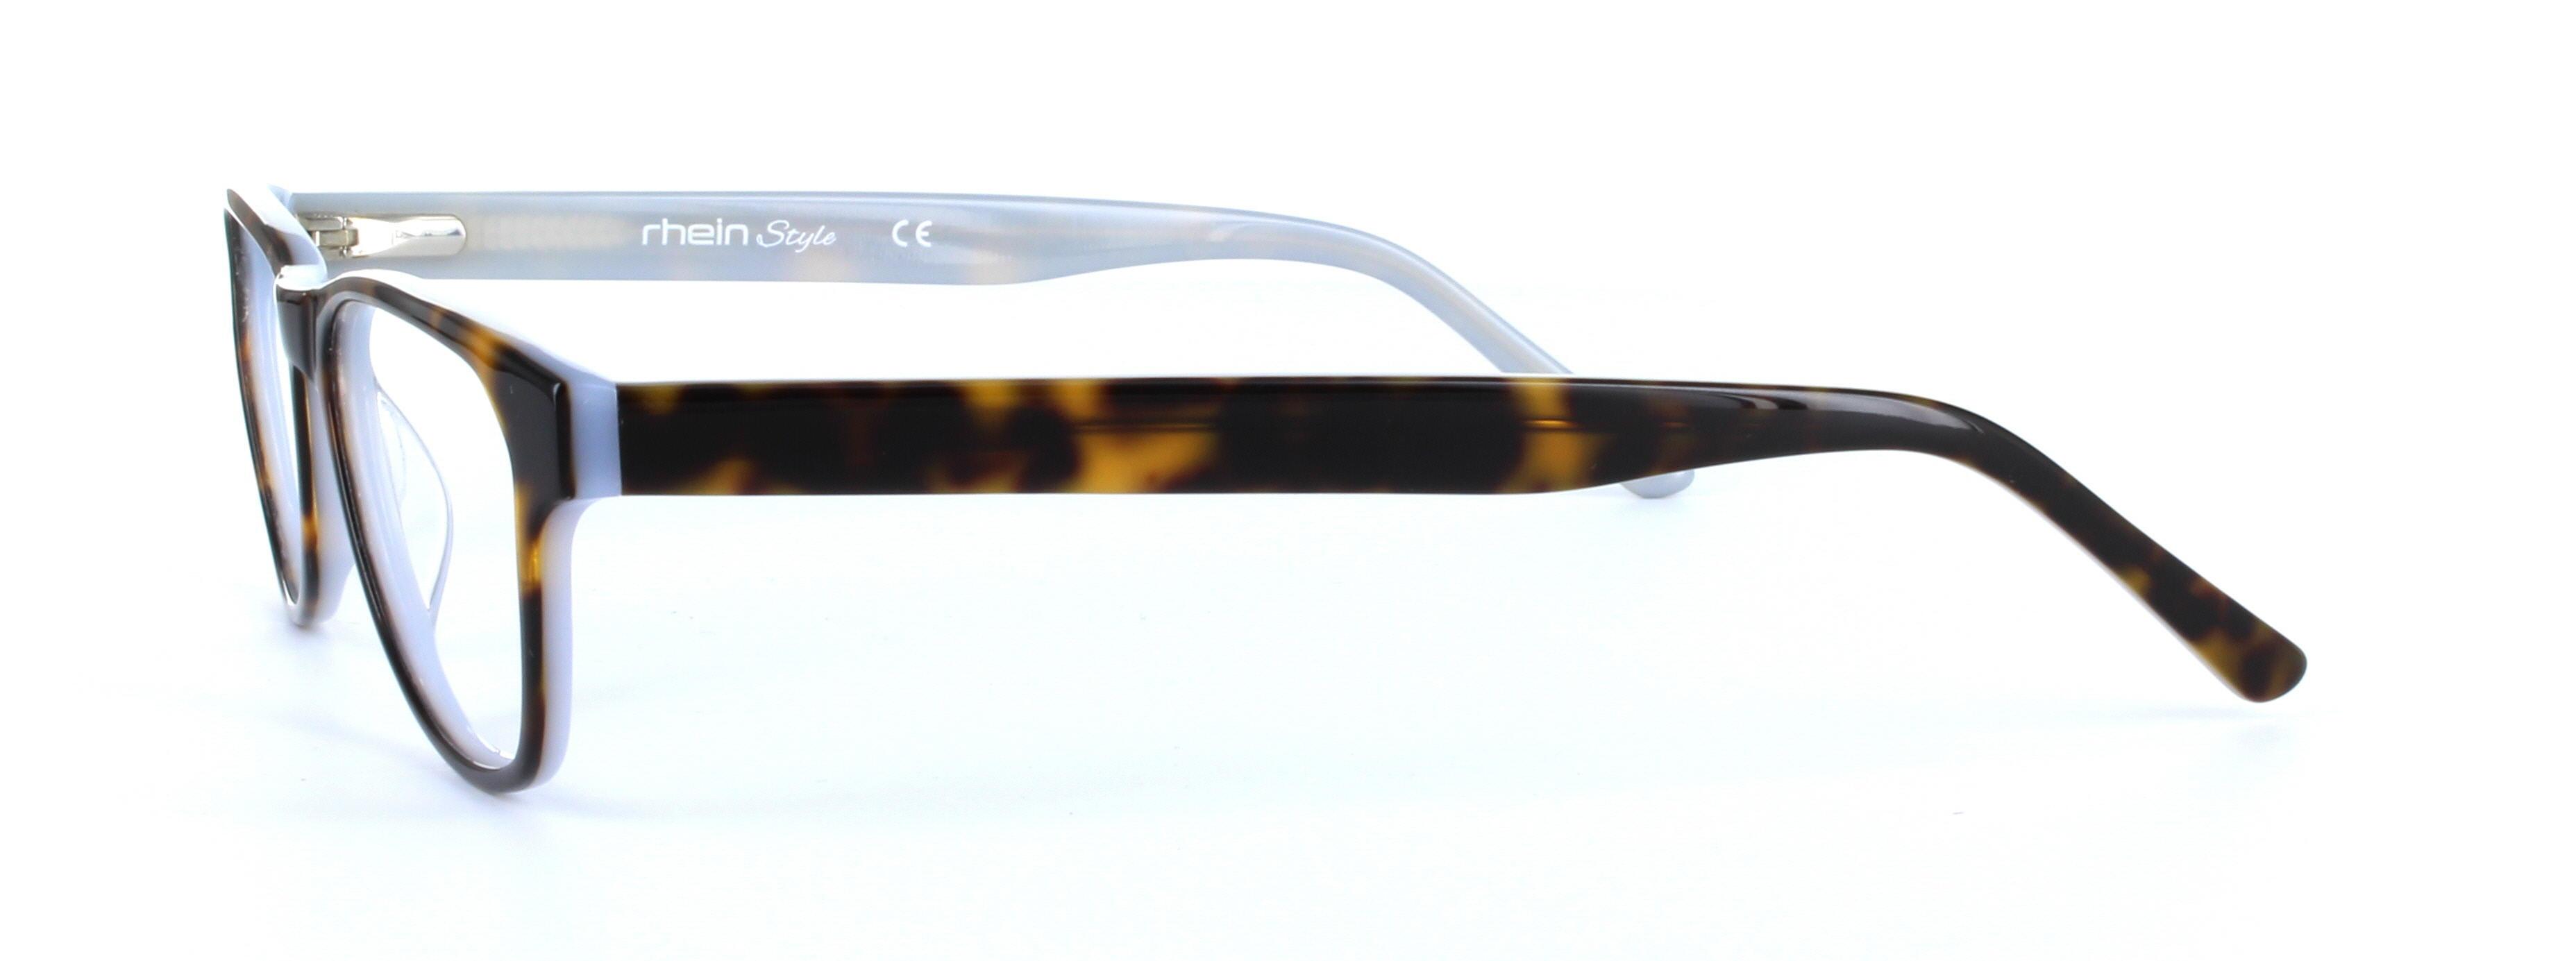 Brown Full Rim Oval Plastic Glasses Whispa - Image View 2